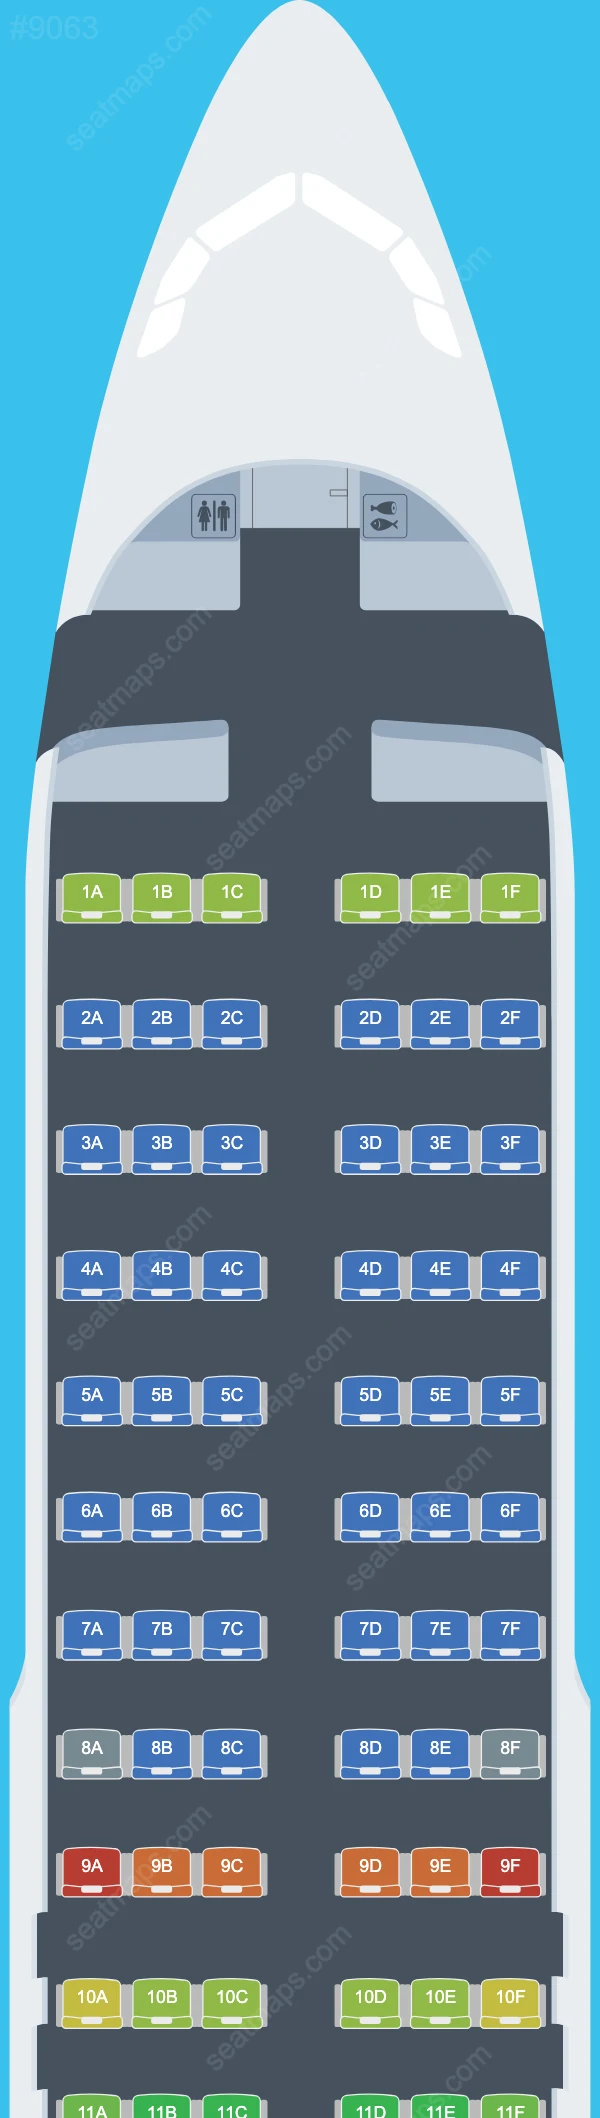 JetBlue Airways Airbus A320 Seat Maps A320-200 V.1